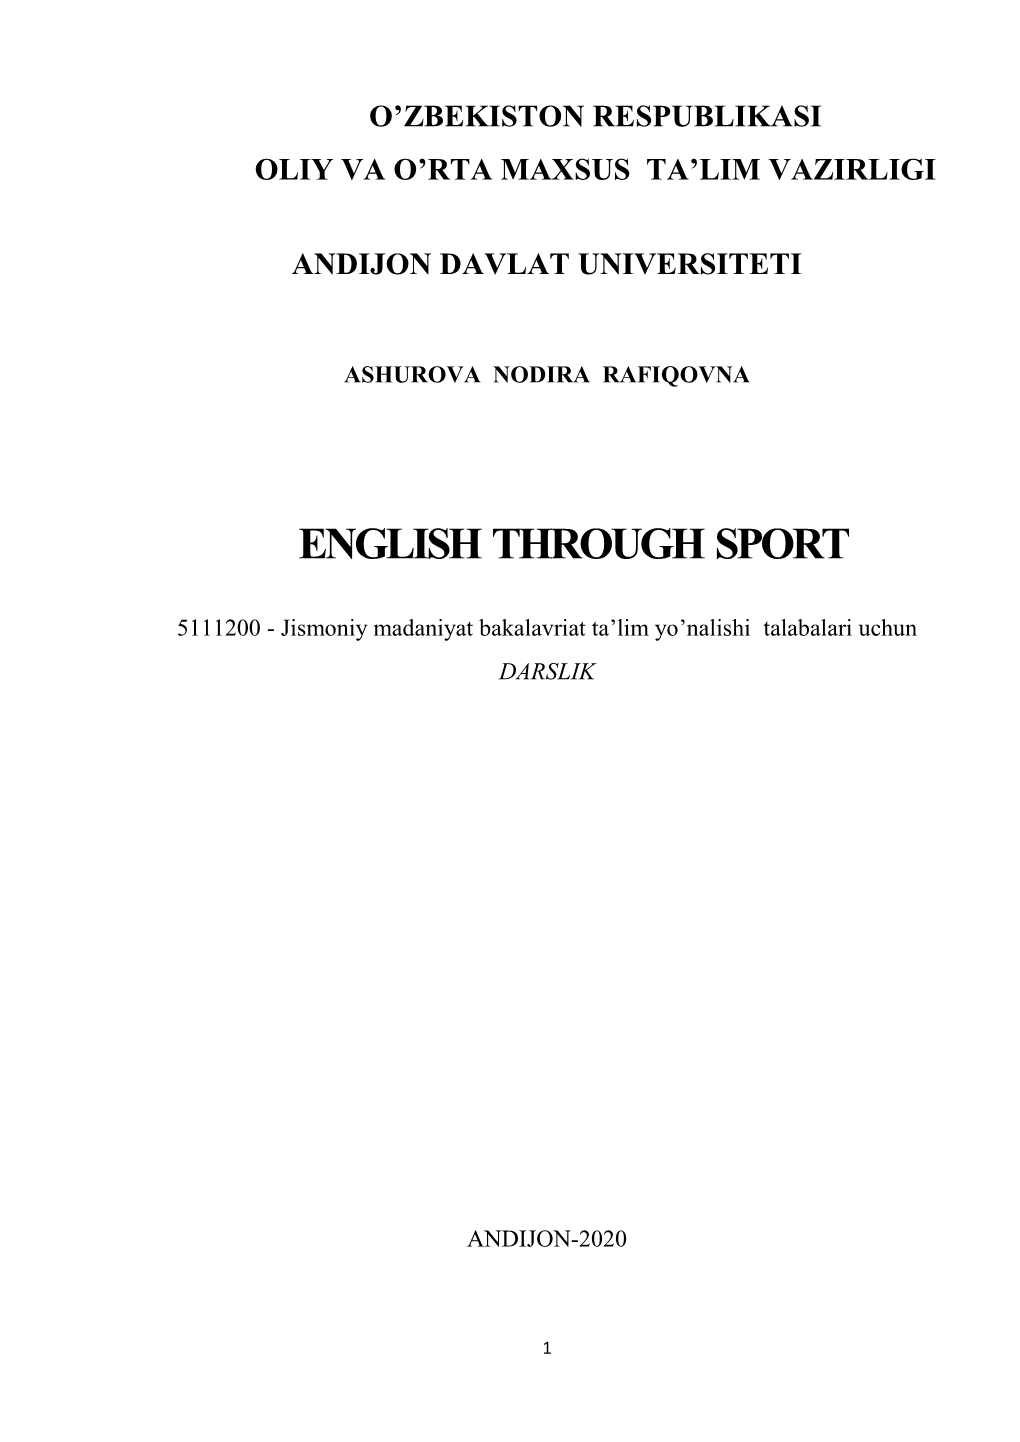 English Through Sport